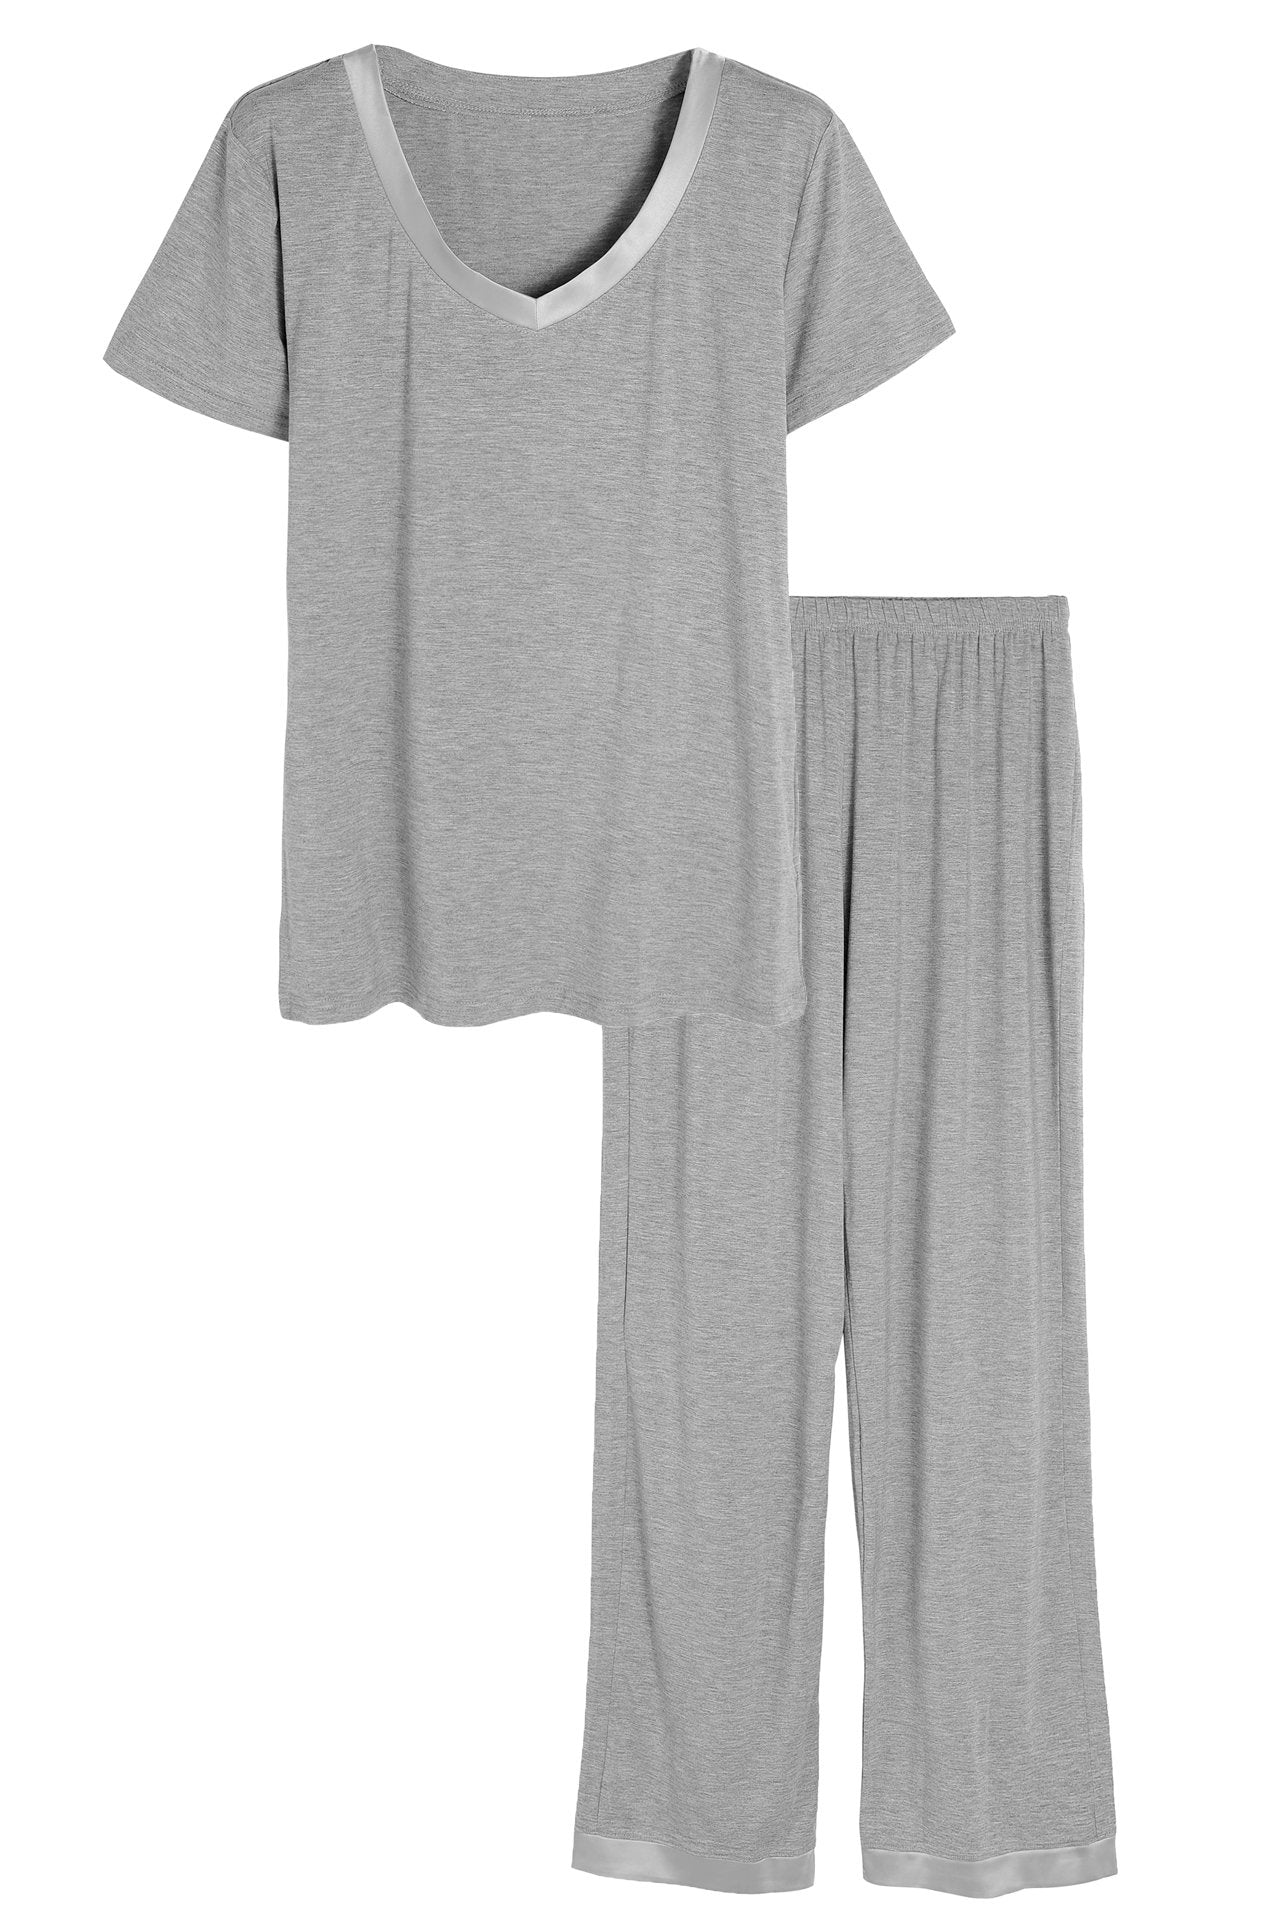 Women's Petite Size Pajama Pants Set Short Sleeve Sleepwear - Latuza